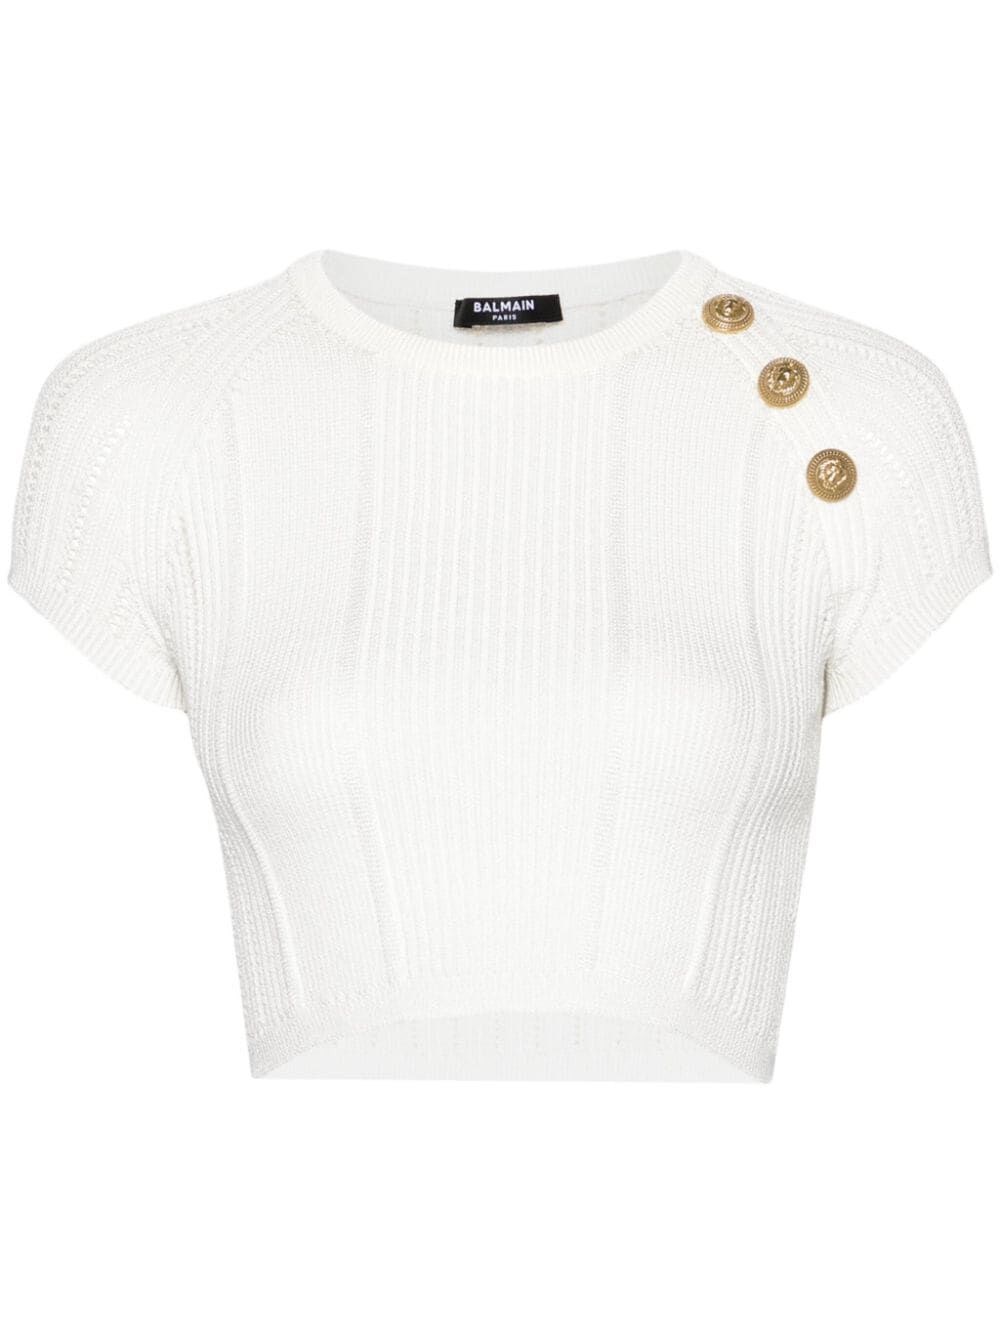 Shop Balmain Knit Crop Top In White